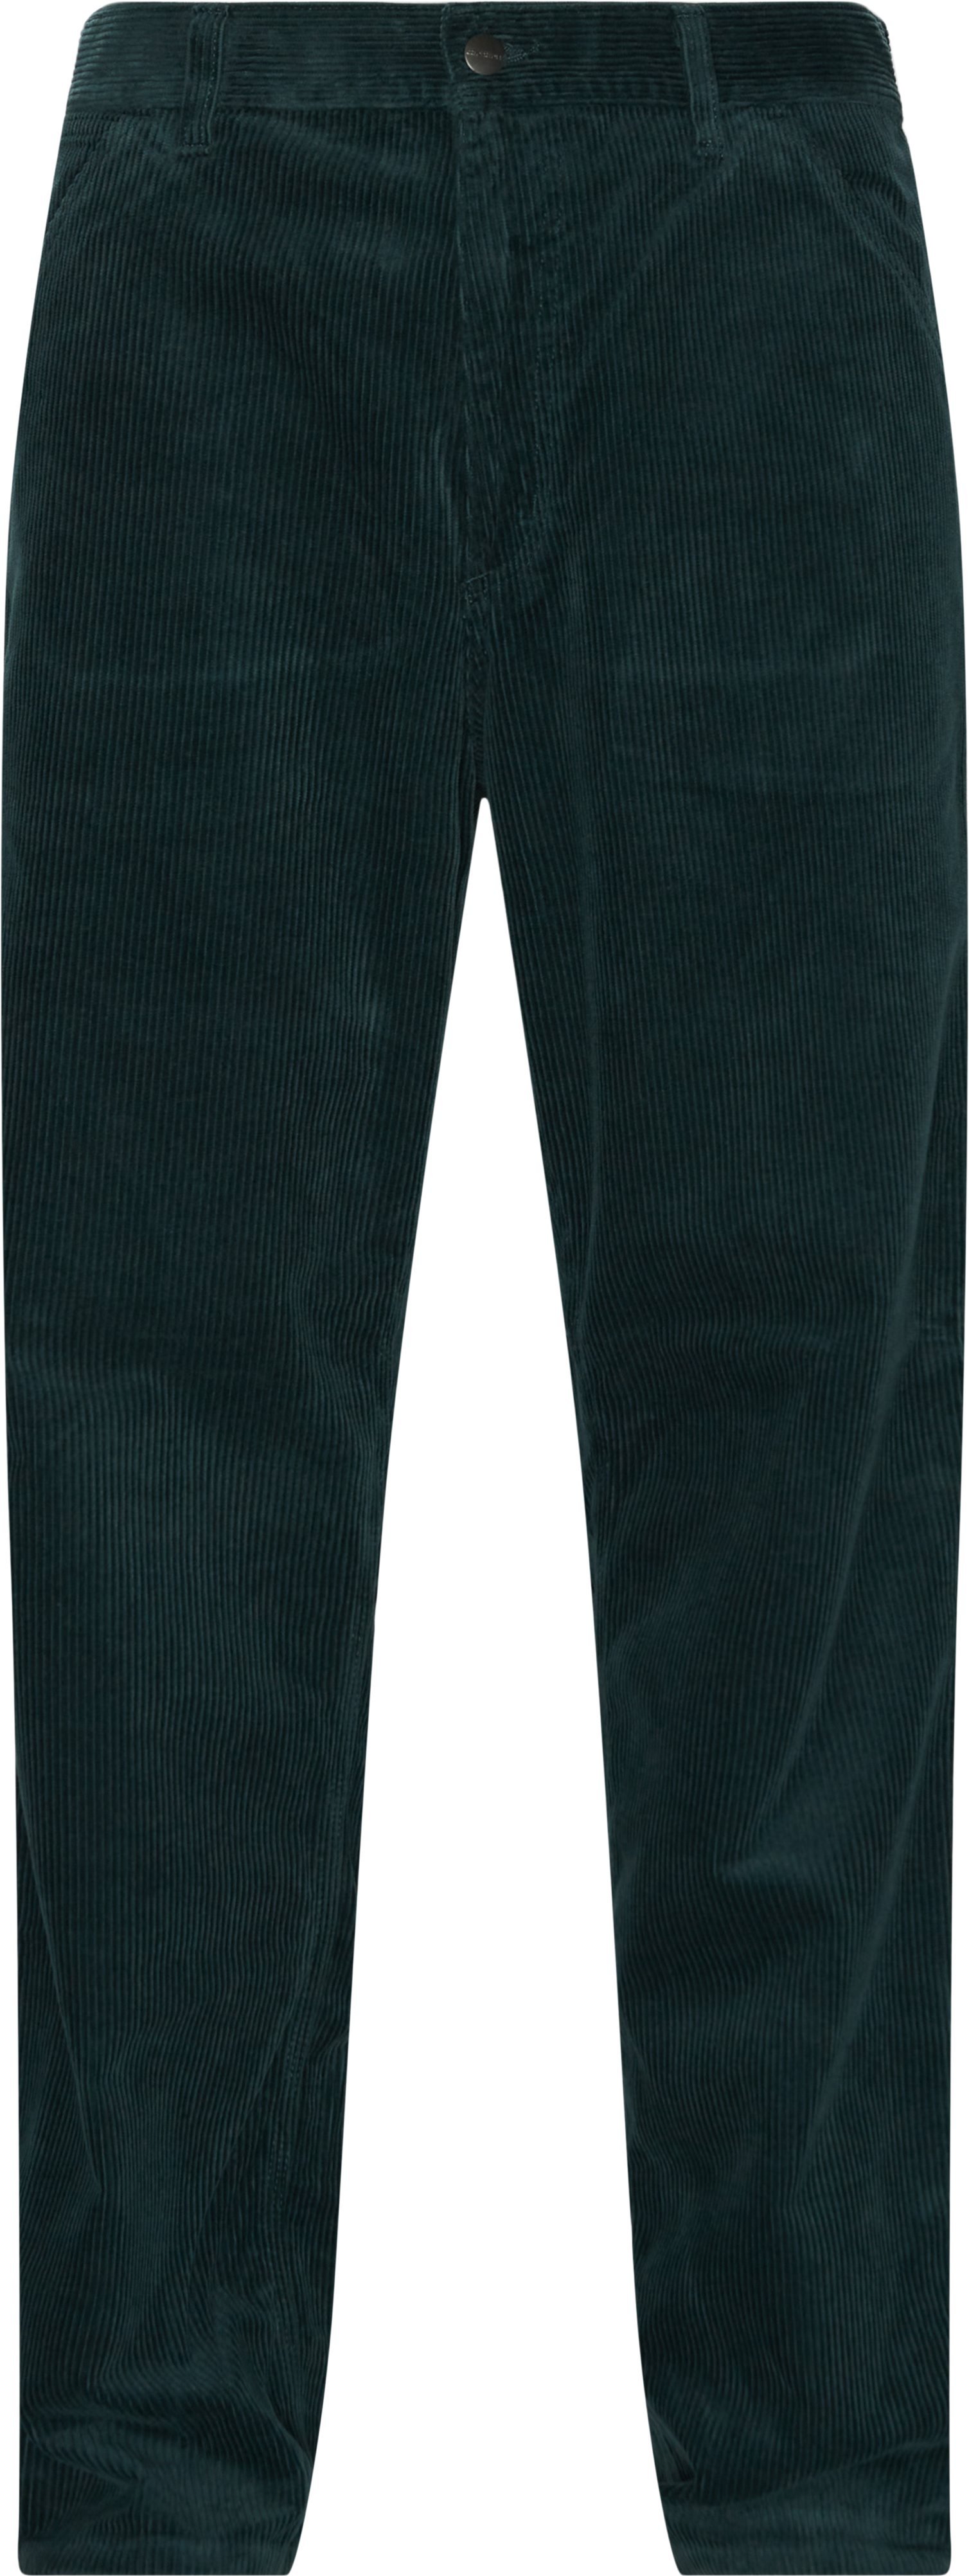 Simple Pant Jeans - Byxor - Straight fit - Grön